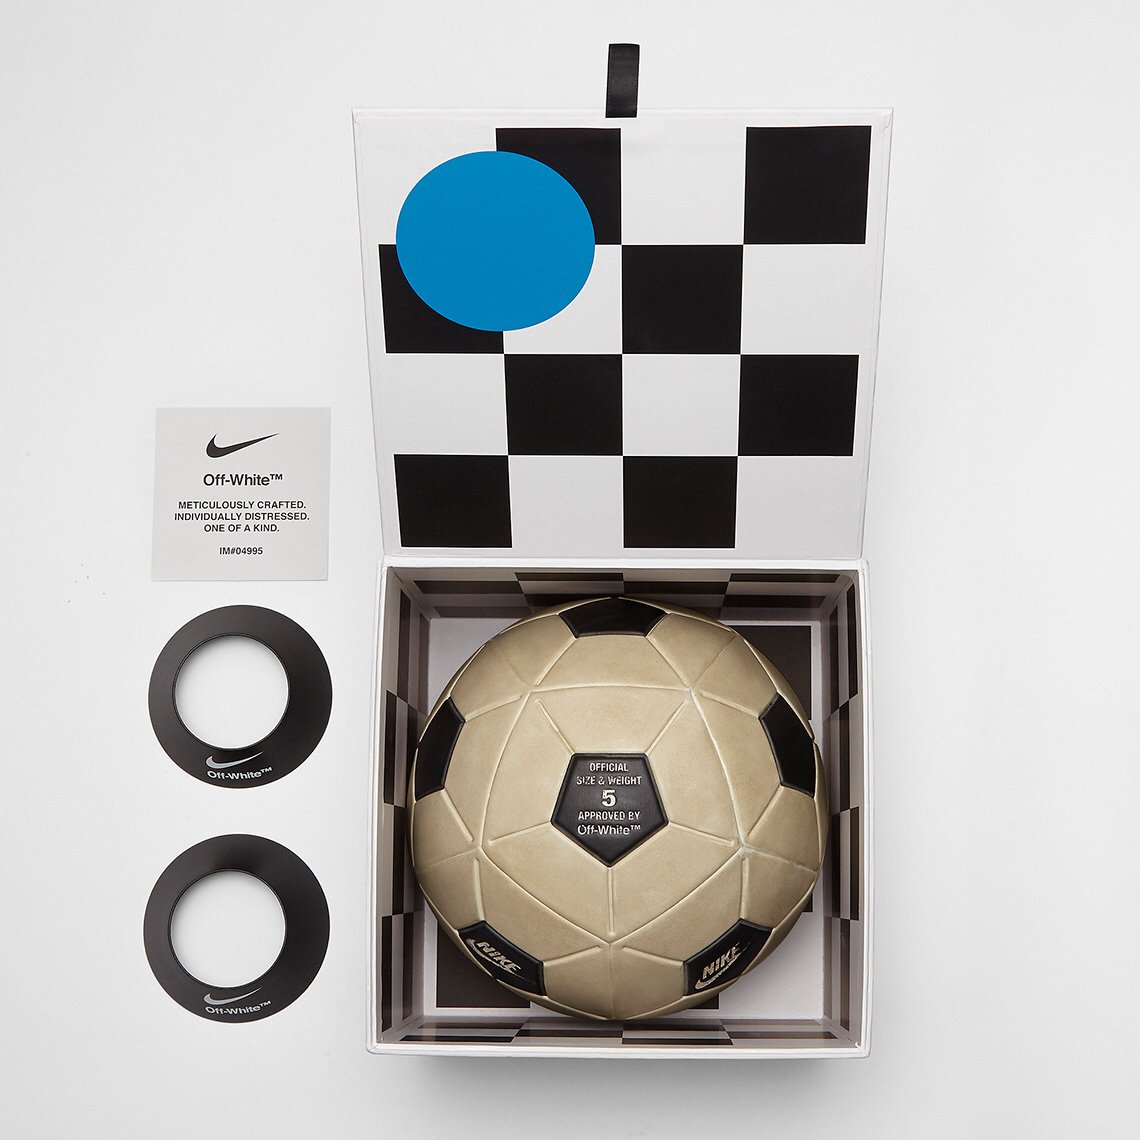 OFF WHITE x Nike “Football, Ball